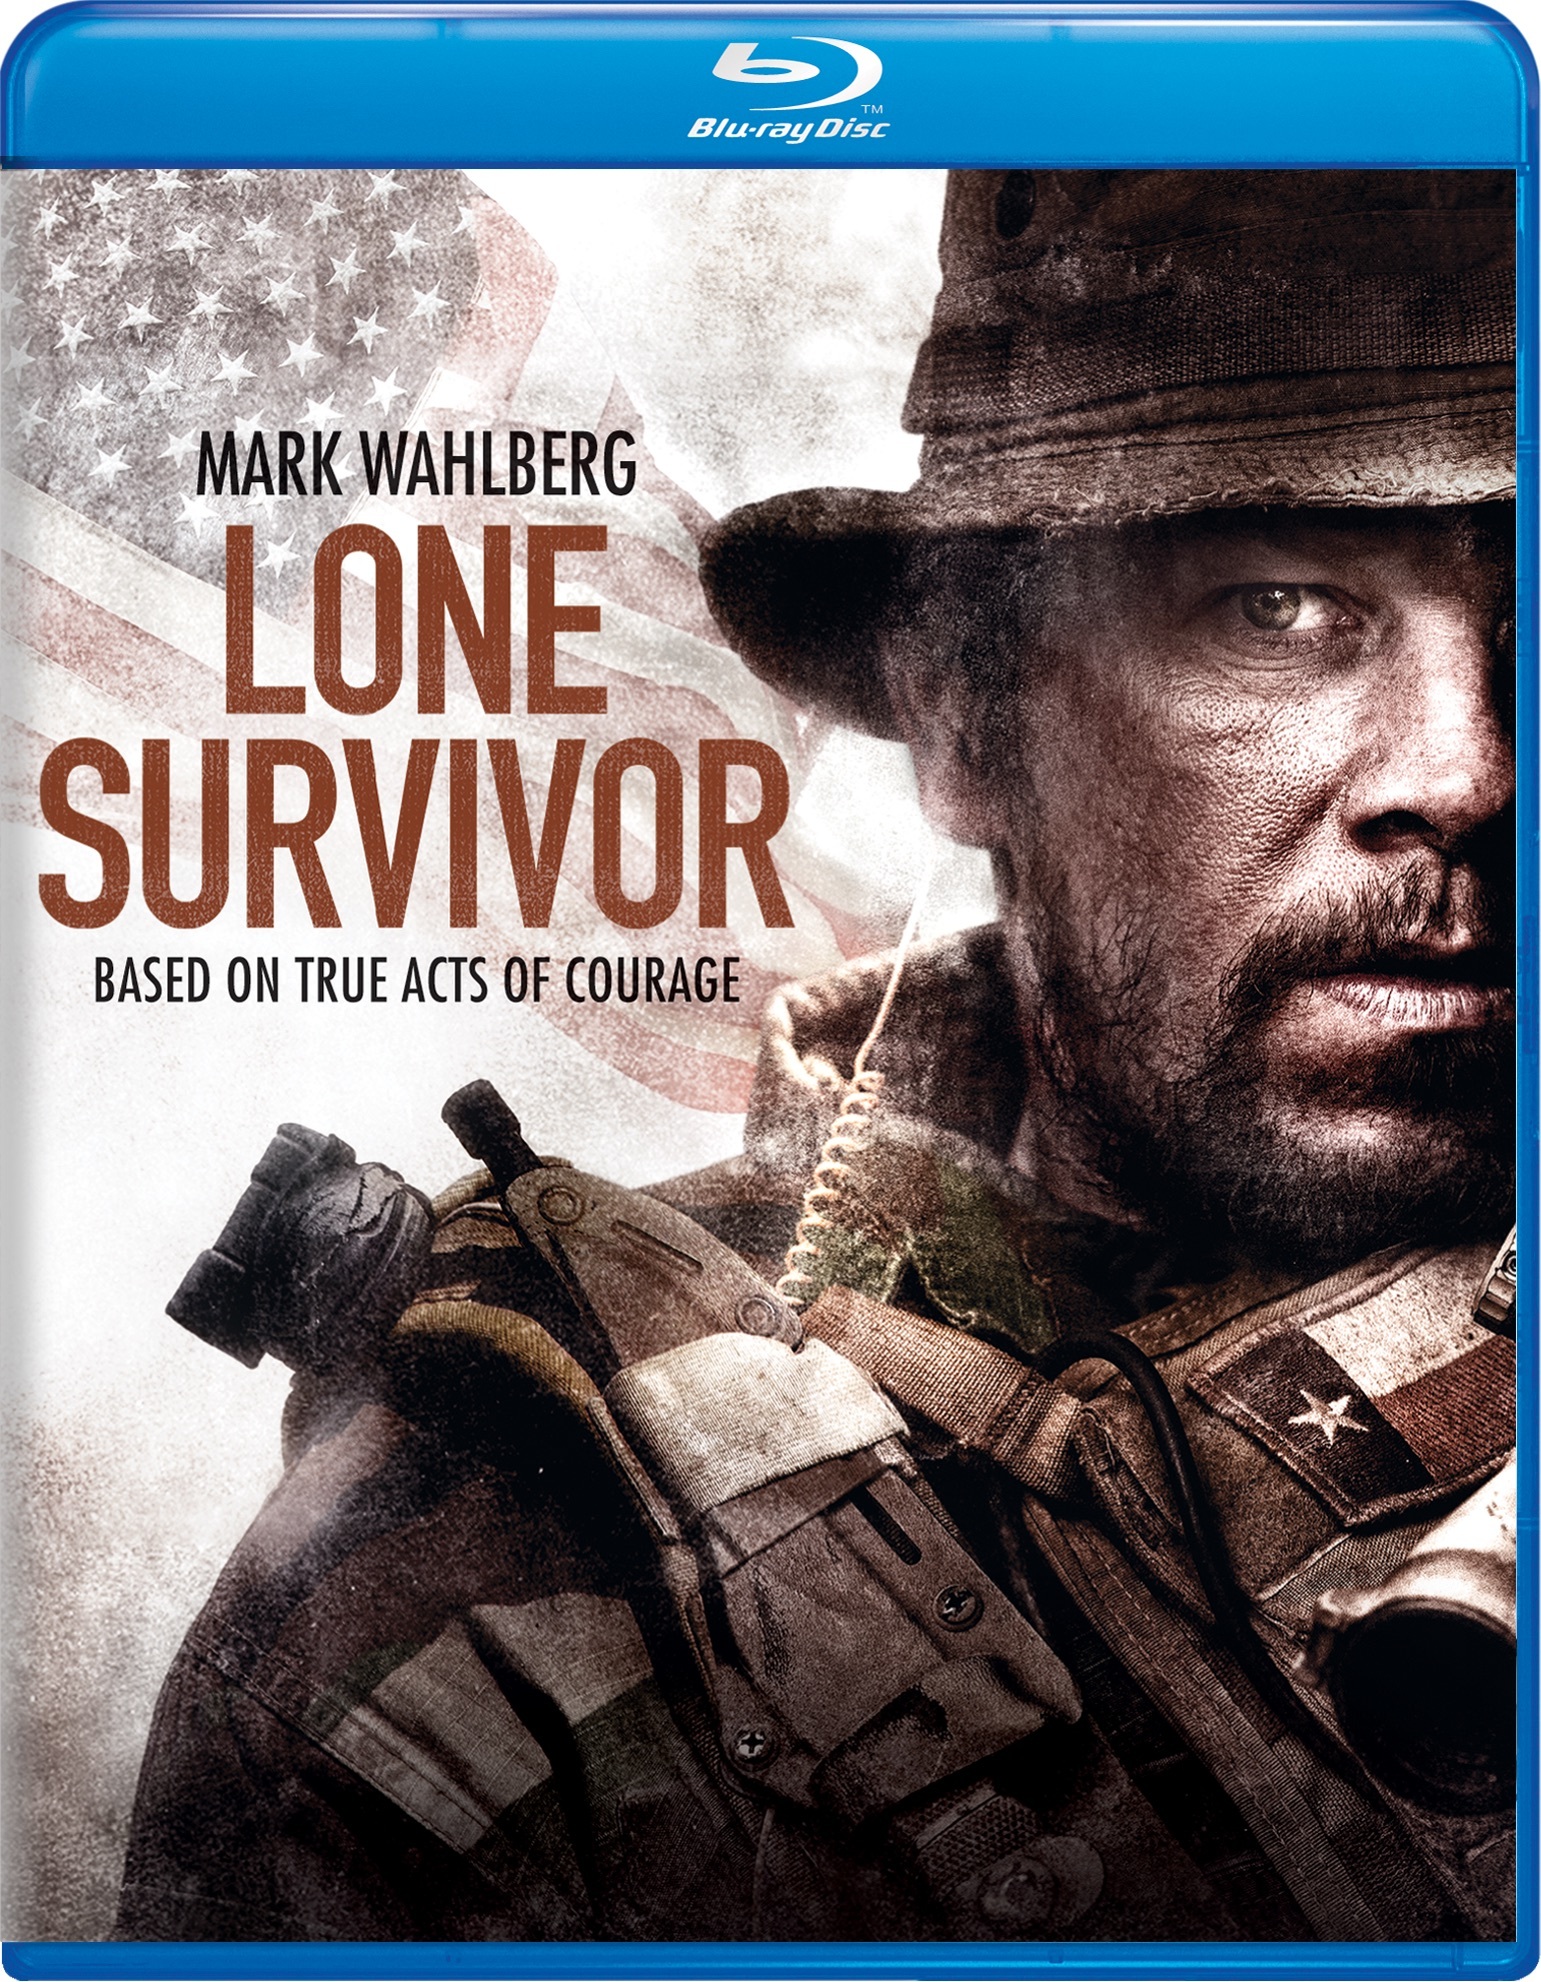 Lone Survivor (Blu-ray New Box Art) - Blu-ray [ 2013 ]  - War Movies On Blu-ray - Movies On GRUV